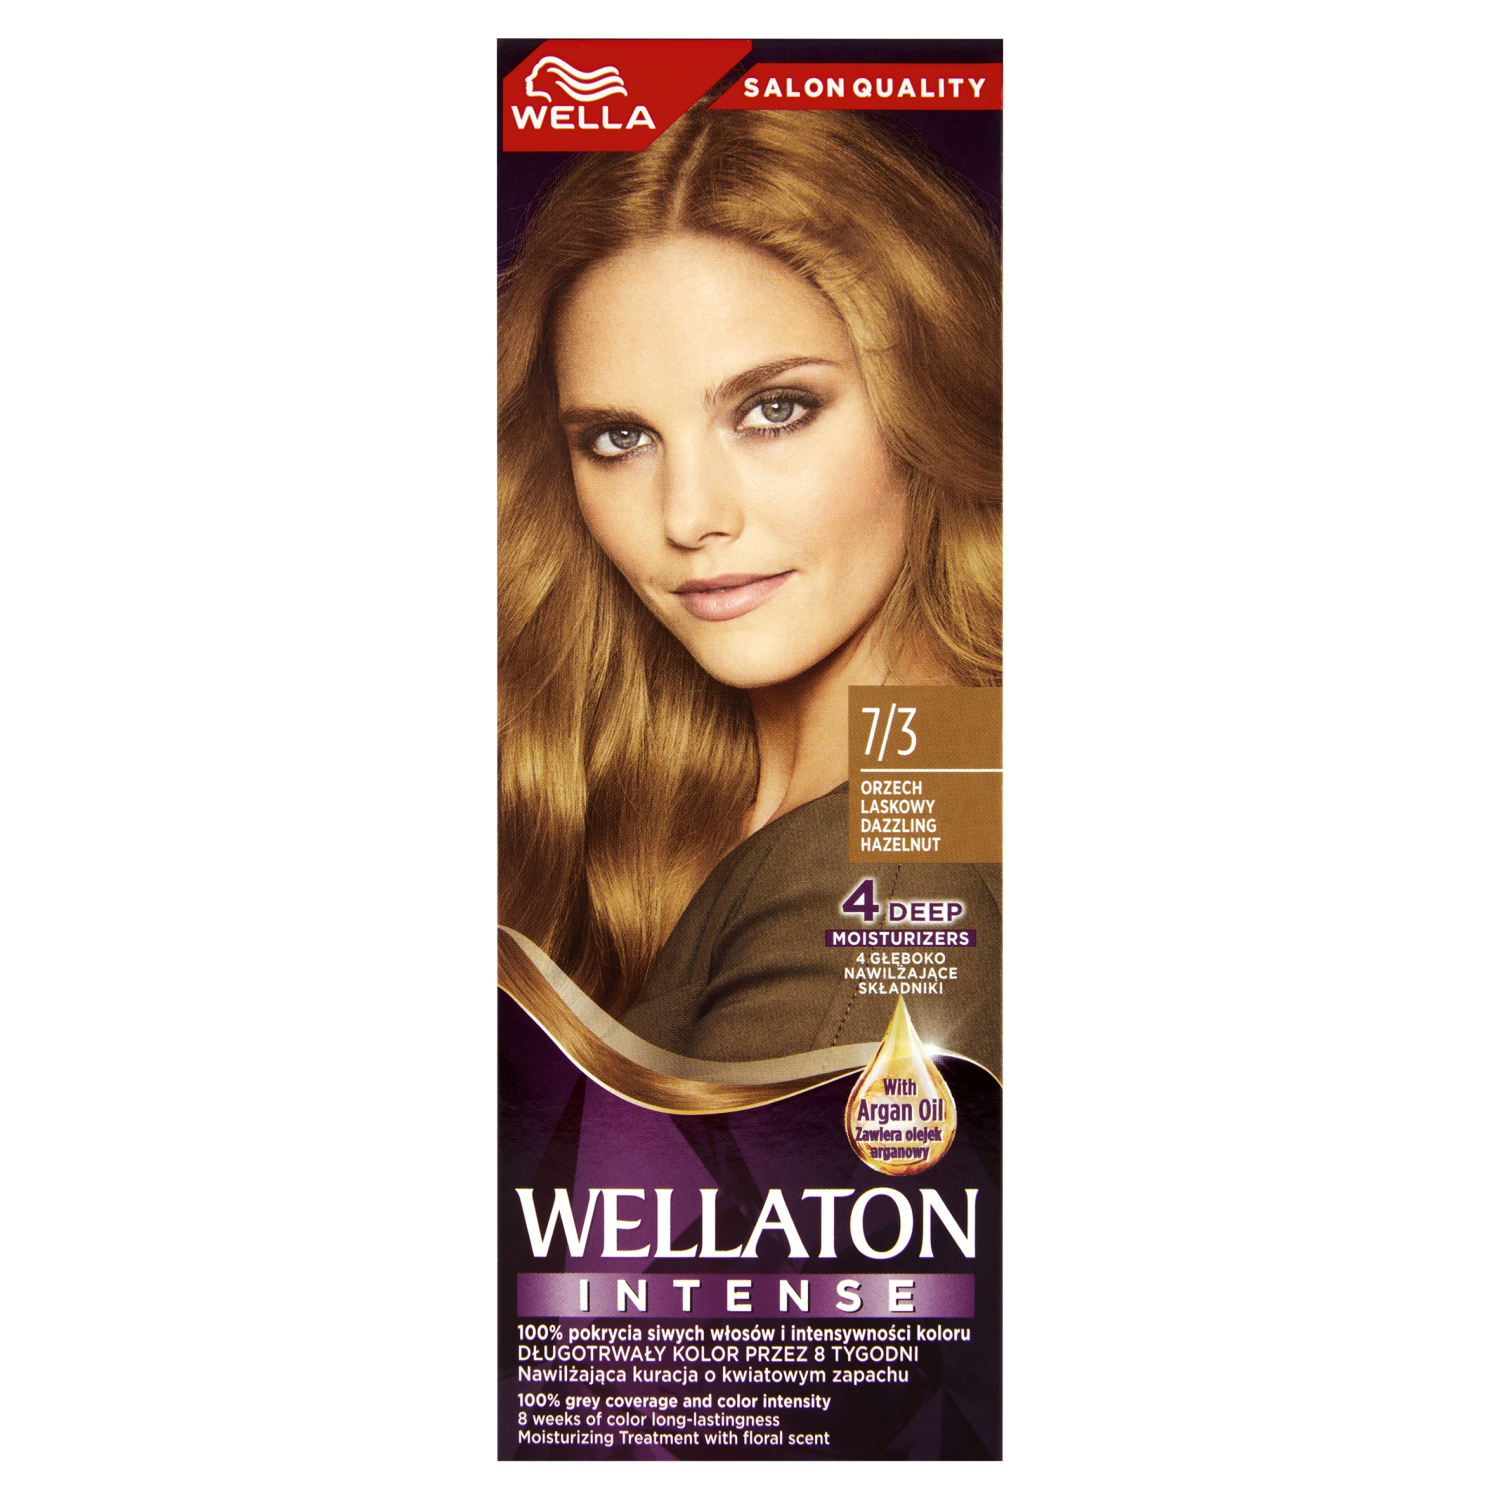 цена Крем-краска для волос 7/3 лесной орех wella wellaton intense Wella Ton Intense, 1 упаковка